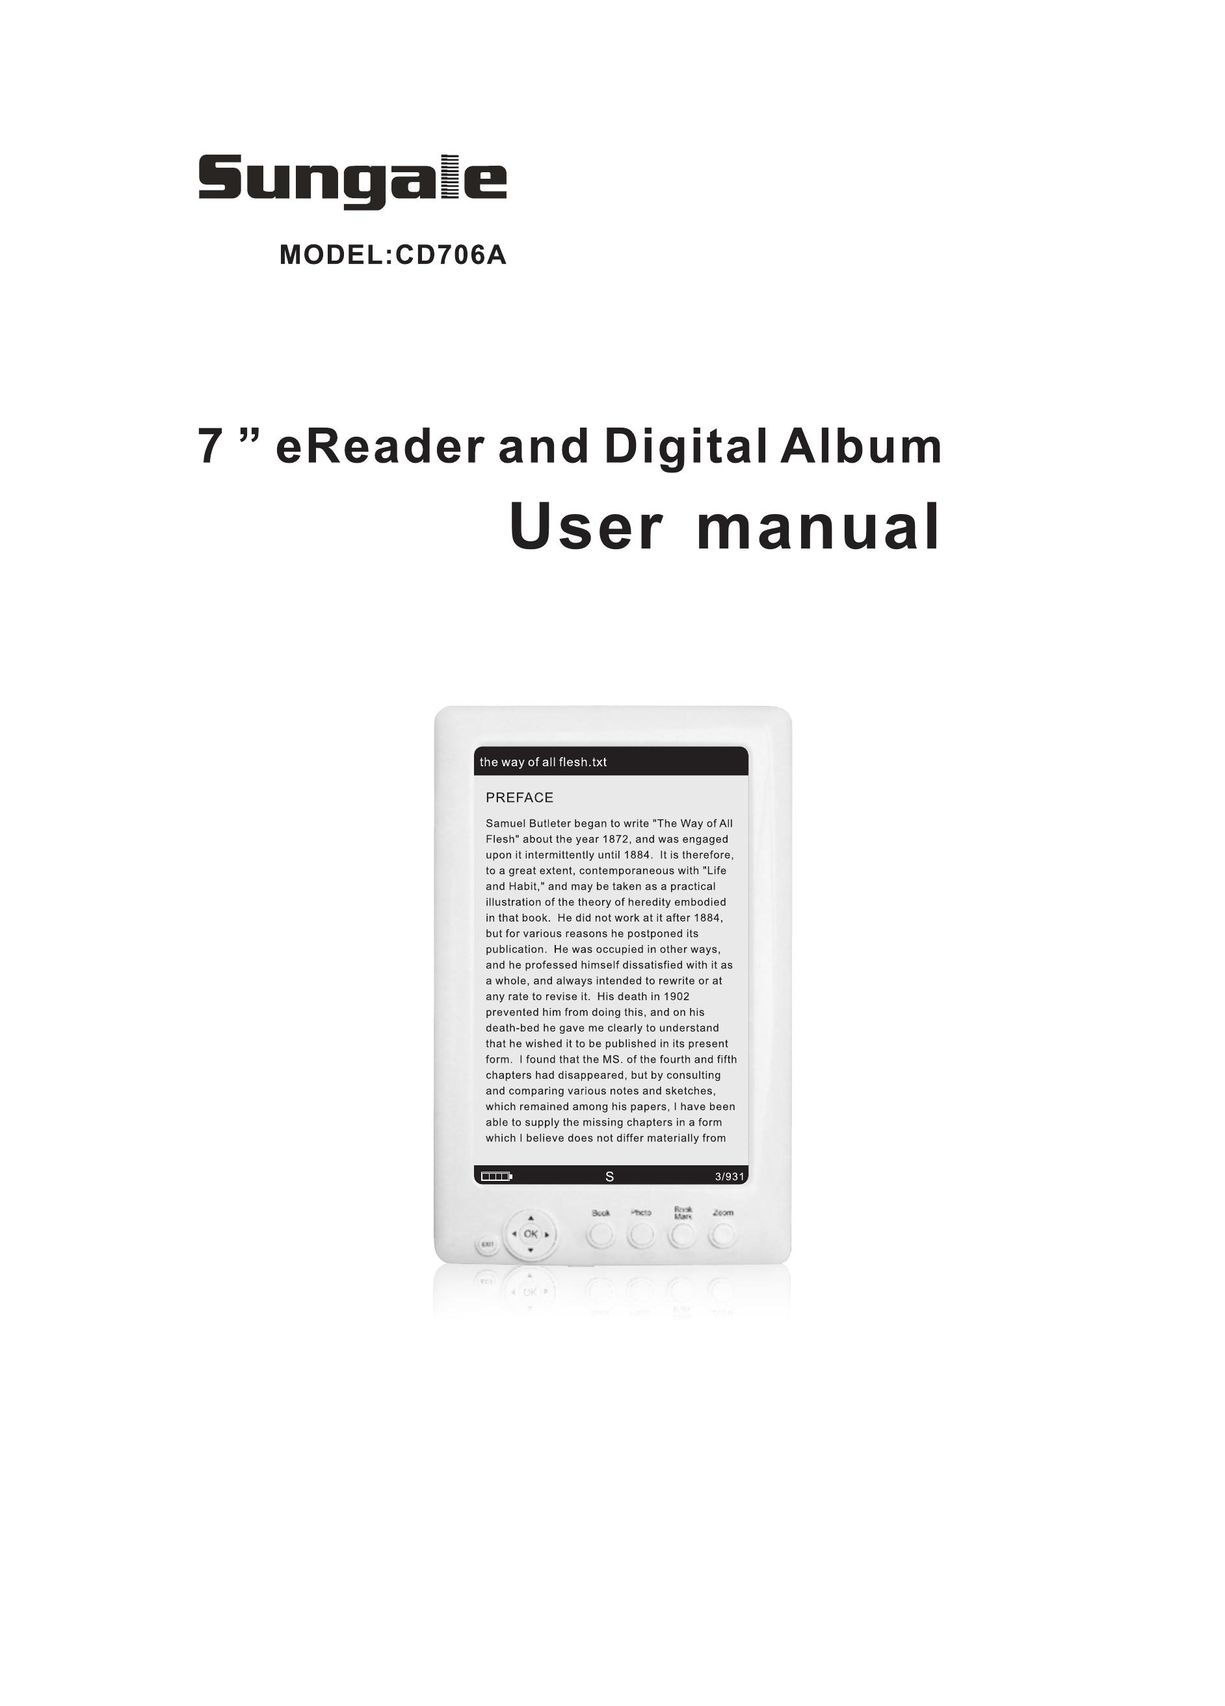 Sungale CD706A eBook Reader User Manual